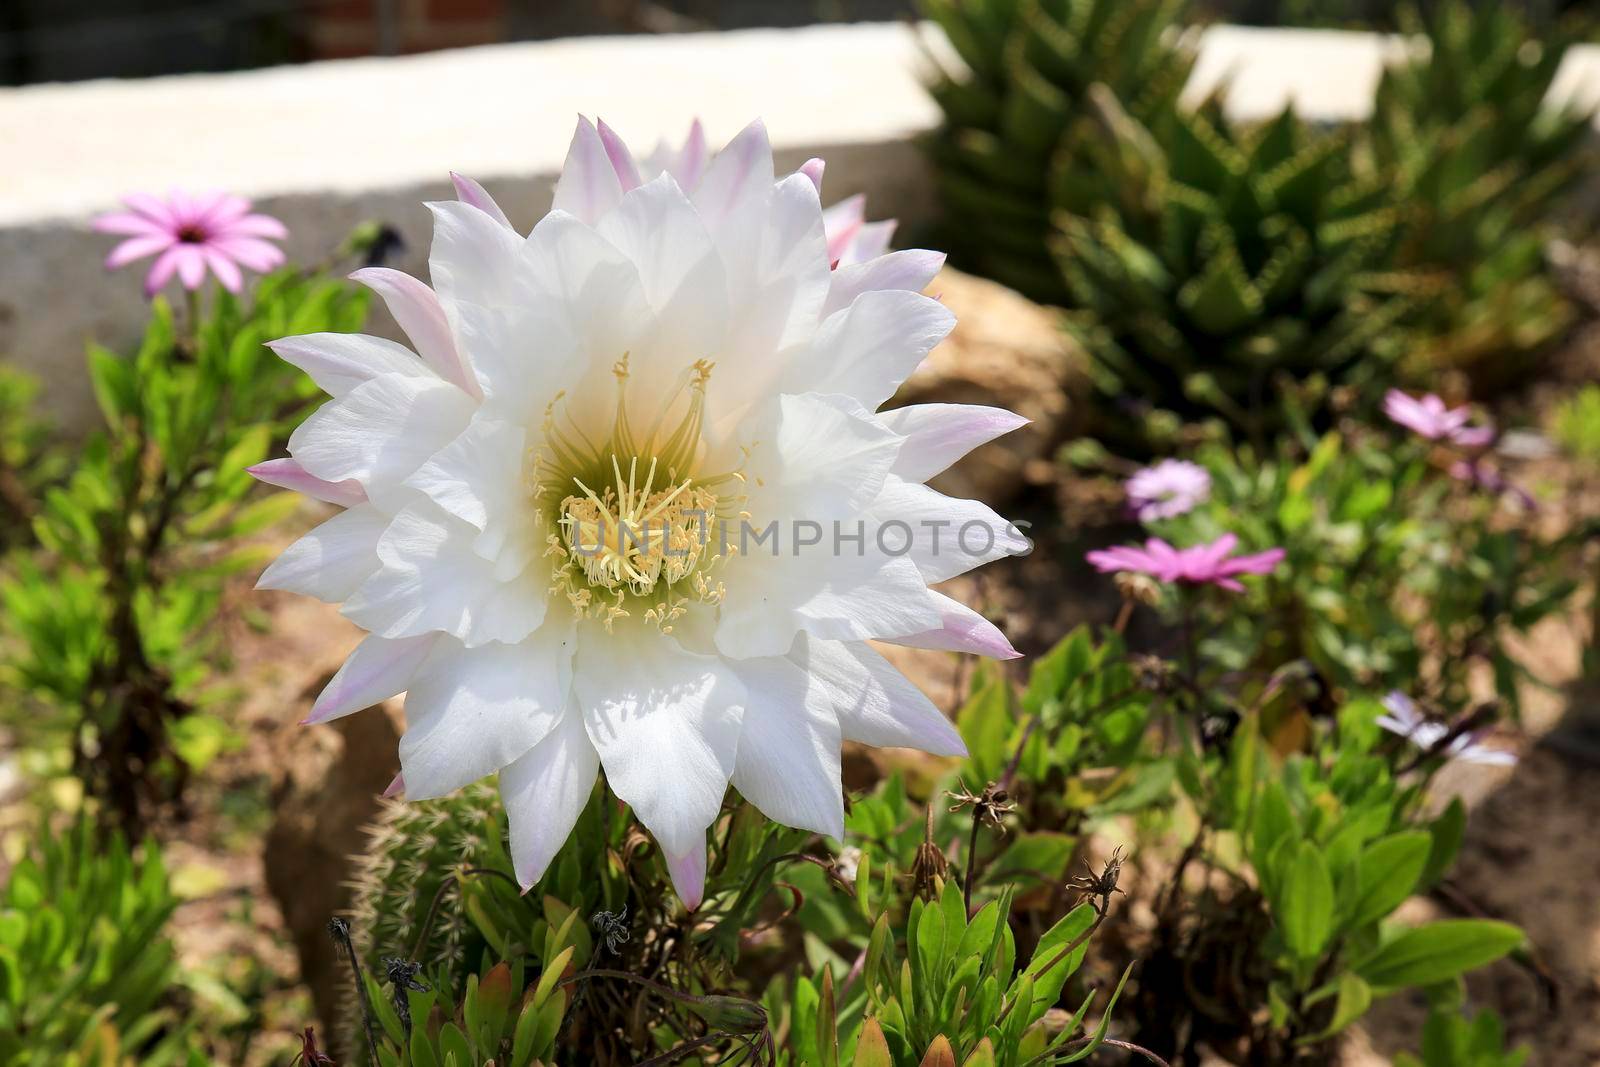 Beautiful Echinopsis Bridgesii Salm-Dyck cactus in bloom in the garden